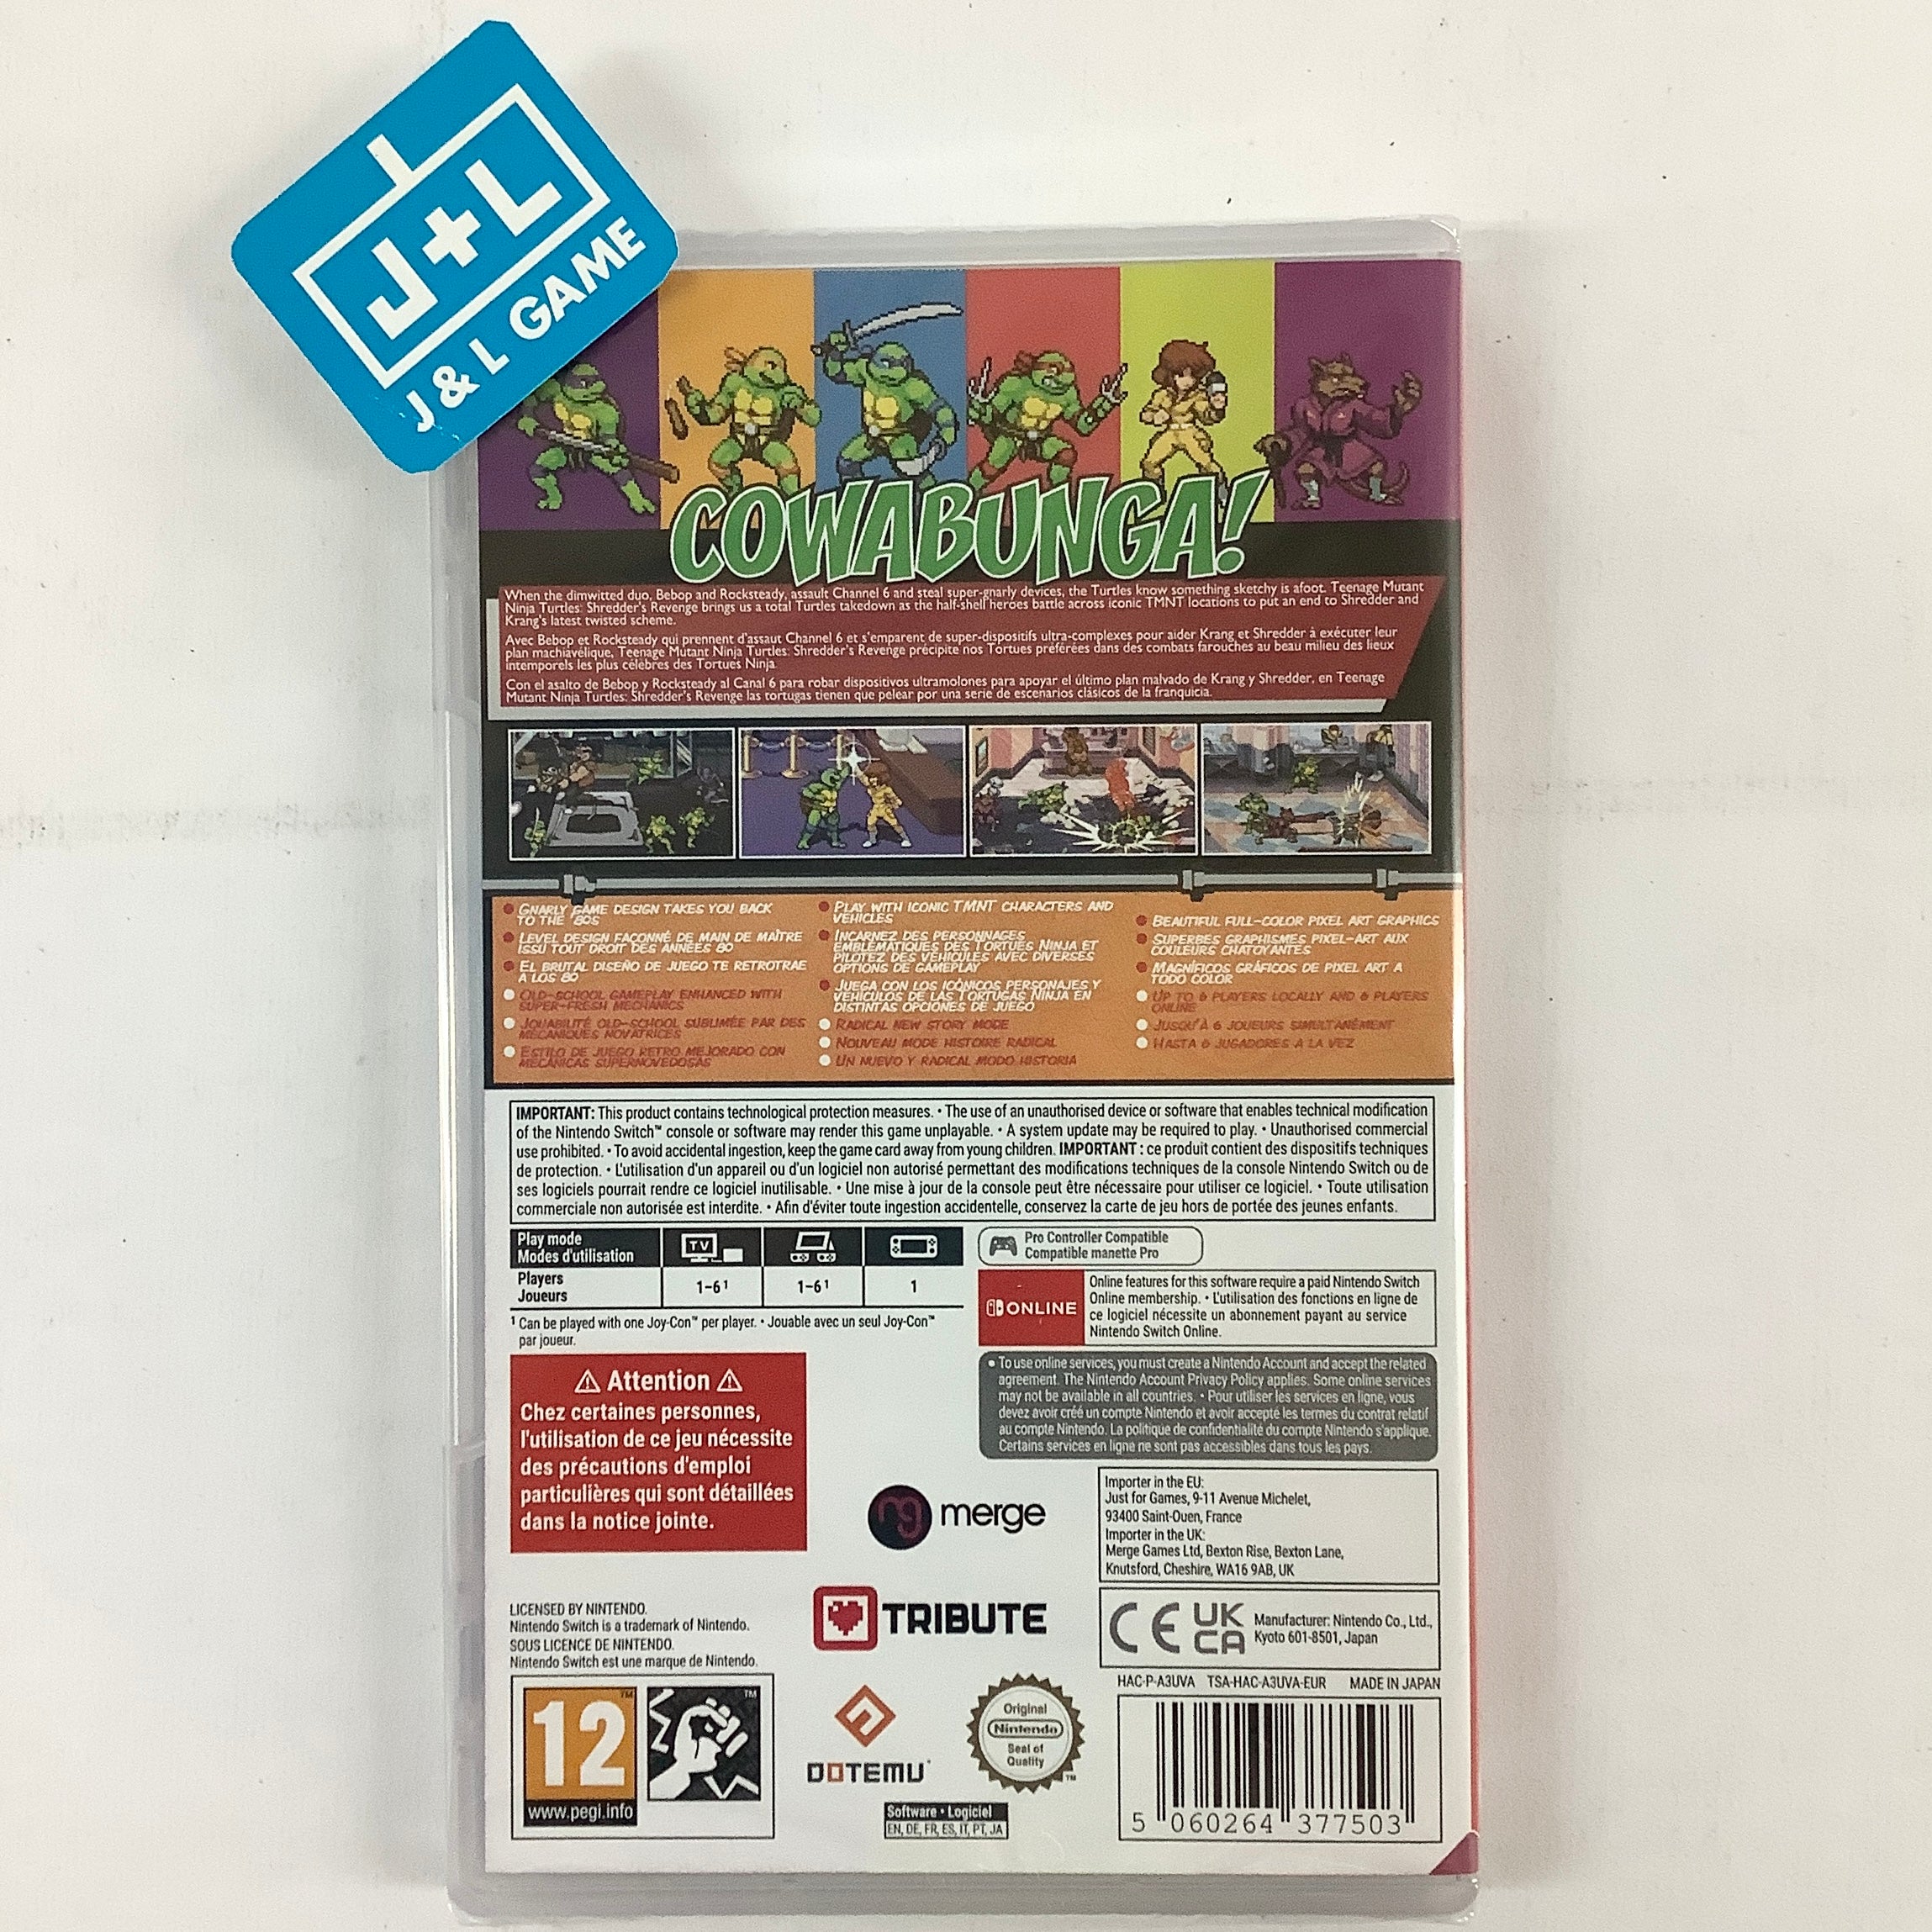 Teenage Mutant Ninja Turtles: Shredder's Revenge - (NSW) Nintendo Switch (European Import) Video Games Merge Games   